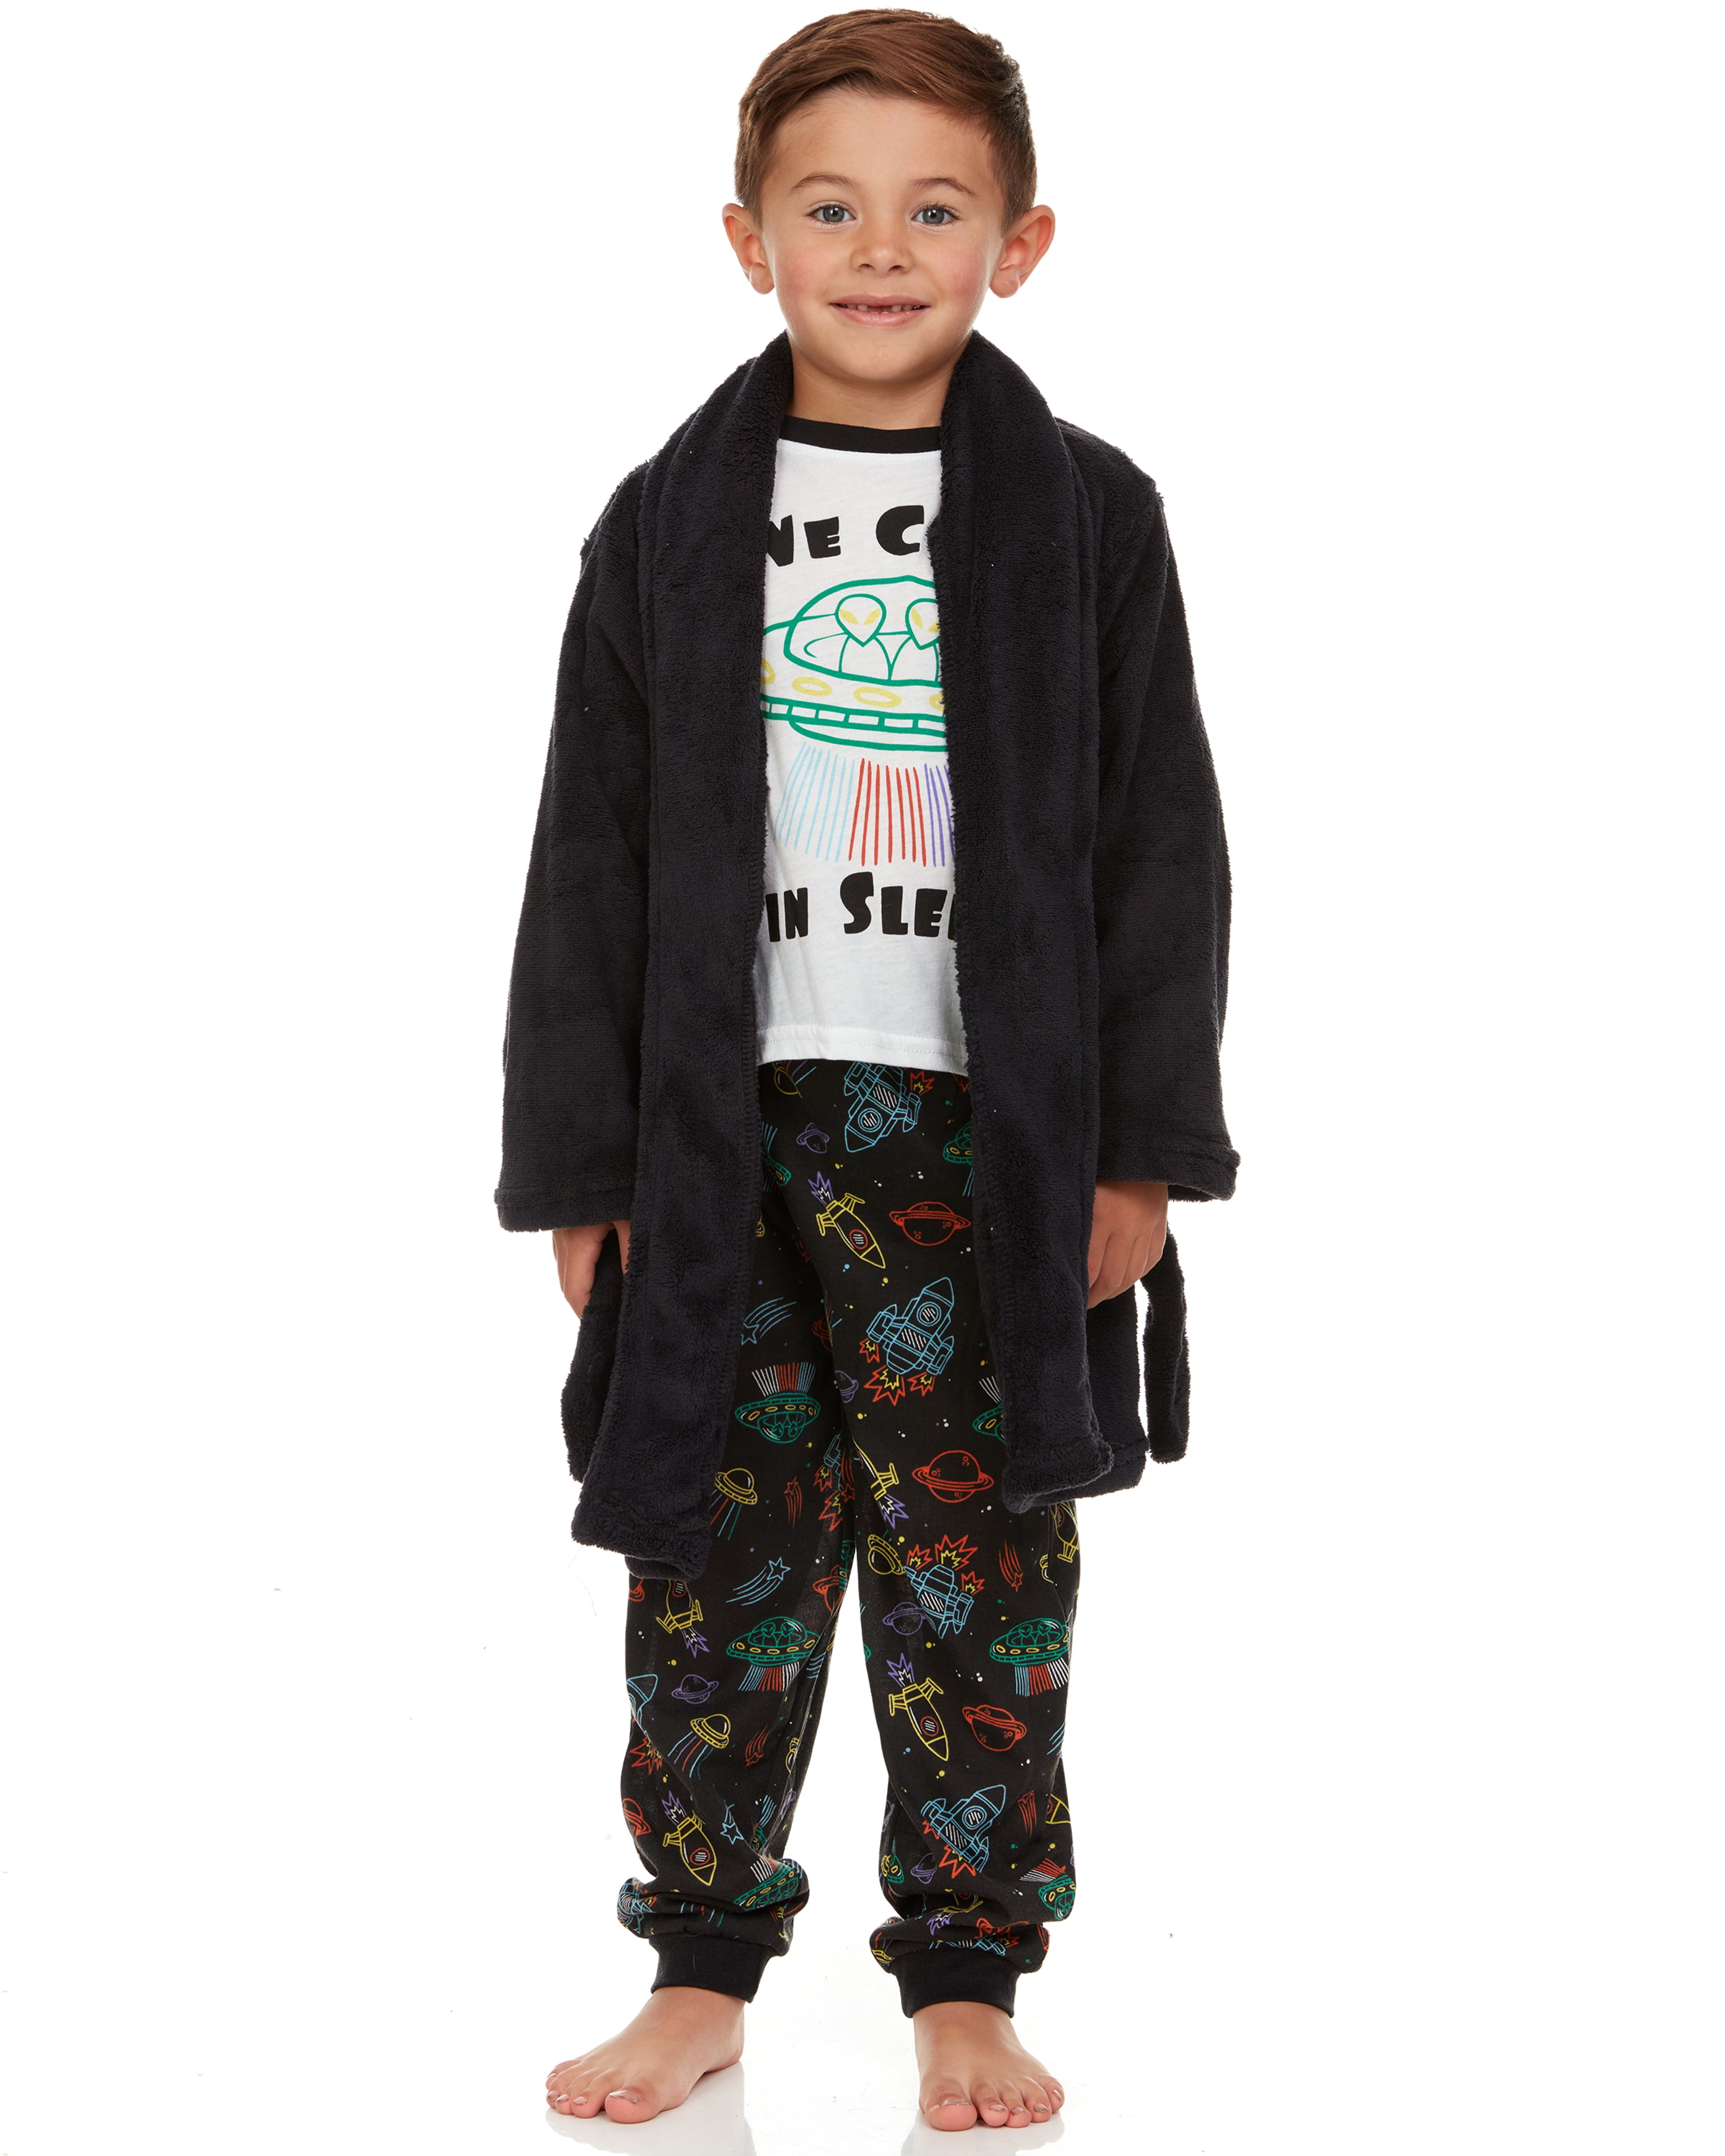 Two-Piece Suit Children's Warm Set Clothes Boys Girls Long Johns Pajamas  Kids Thermal Underwear Solid Colors Color: dark blue, Kid Size: 120cm